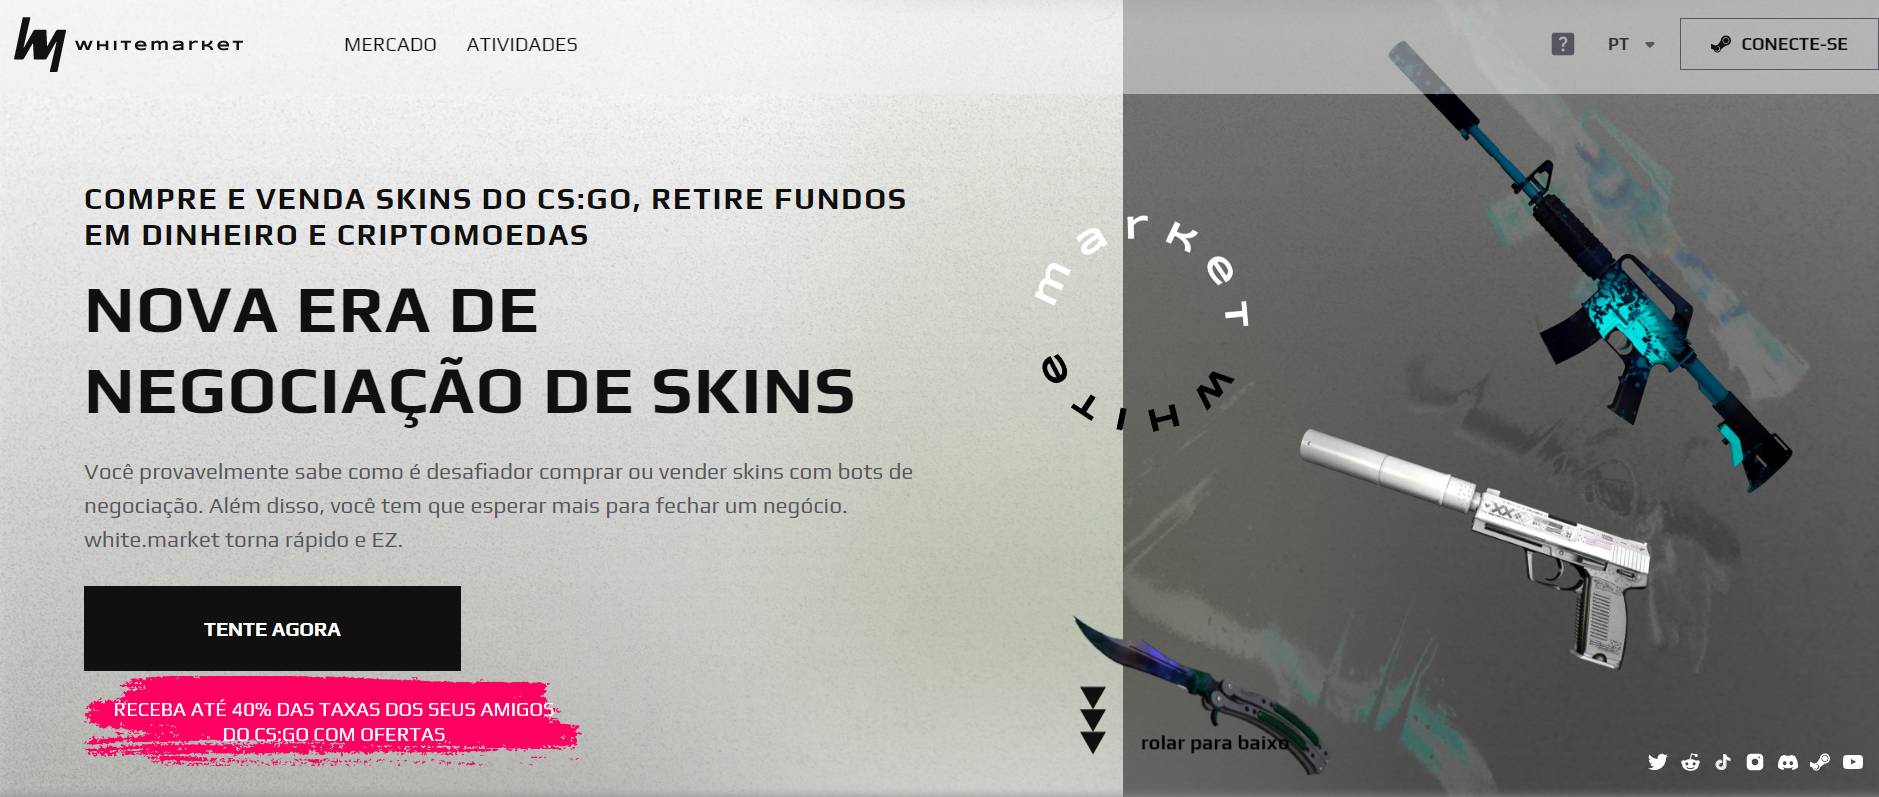 whitrmarket site de compra de skins csgo